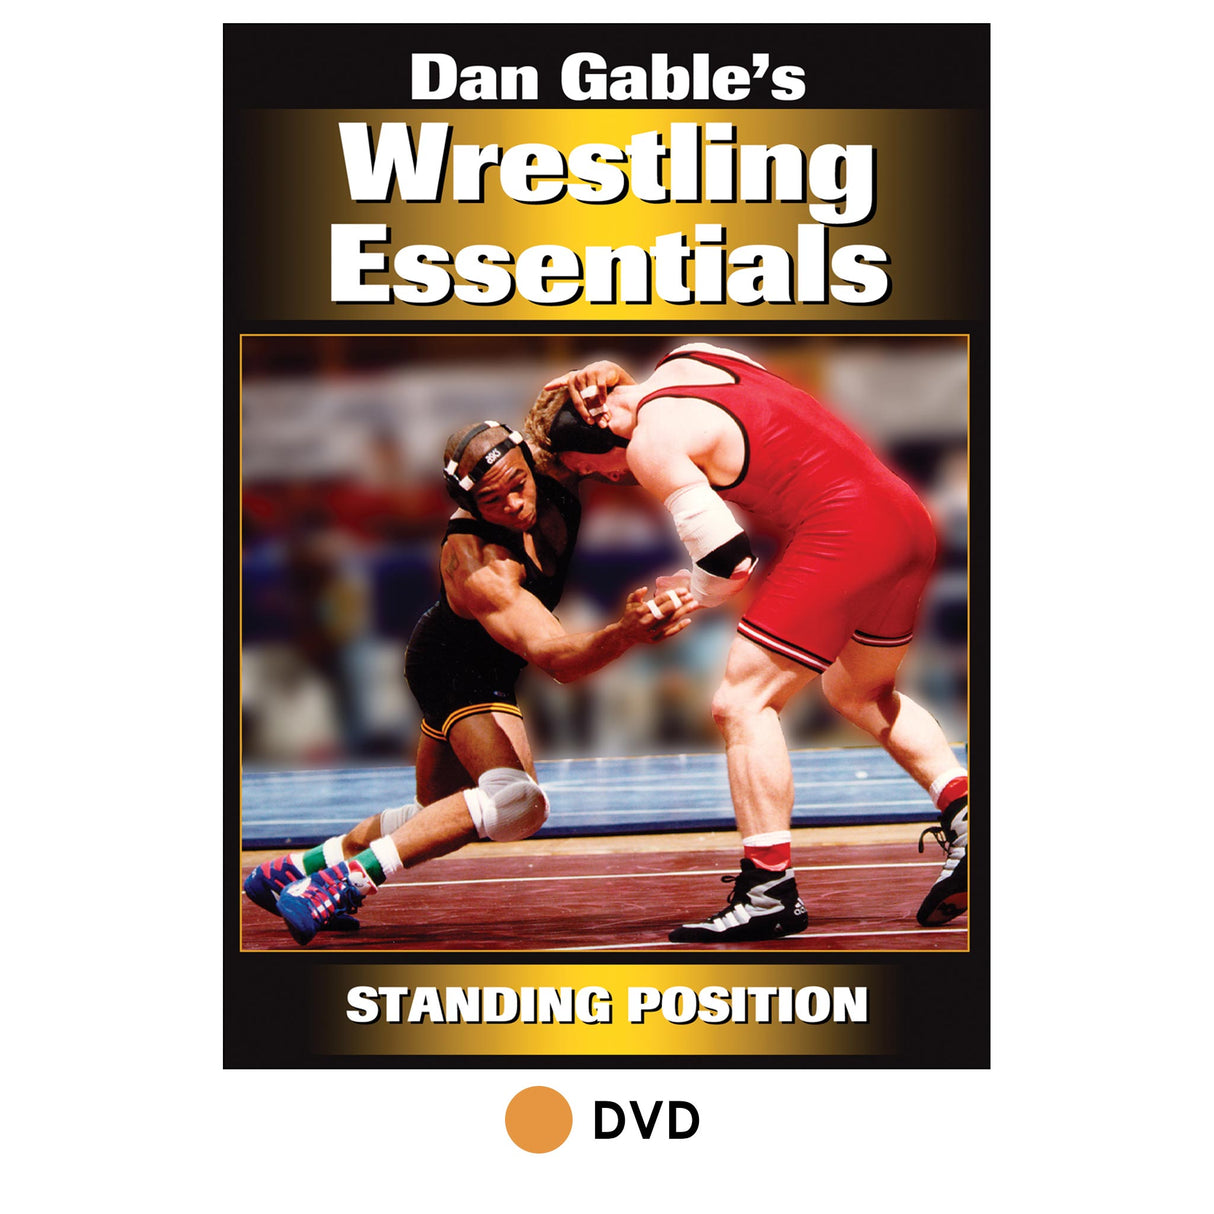 Dan Gable's Wrestling Essentials: Standing Position DVD